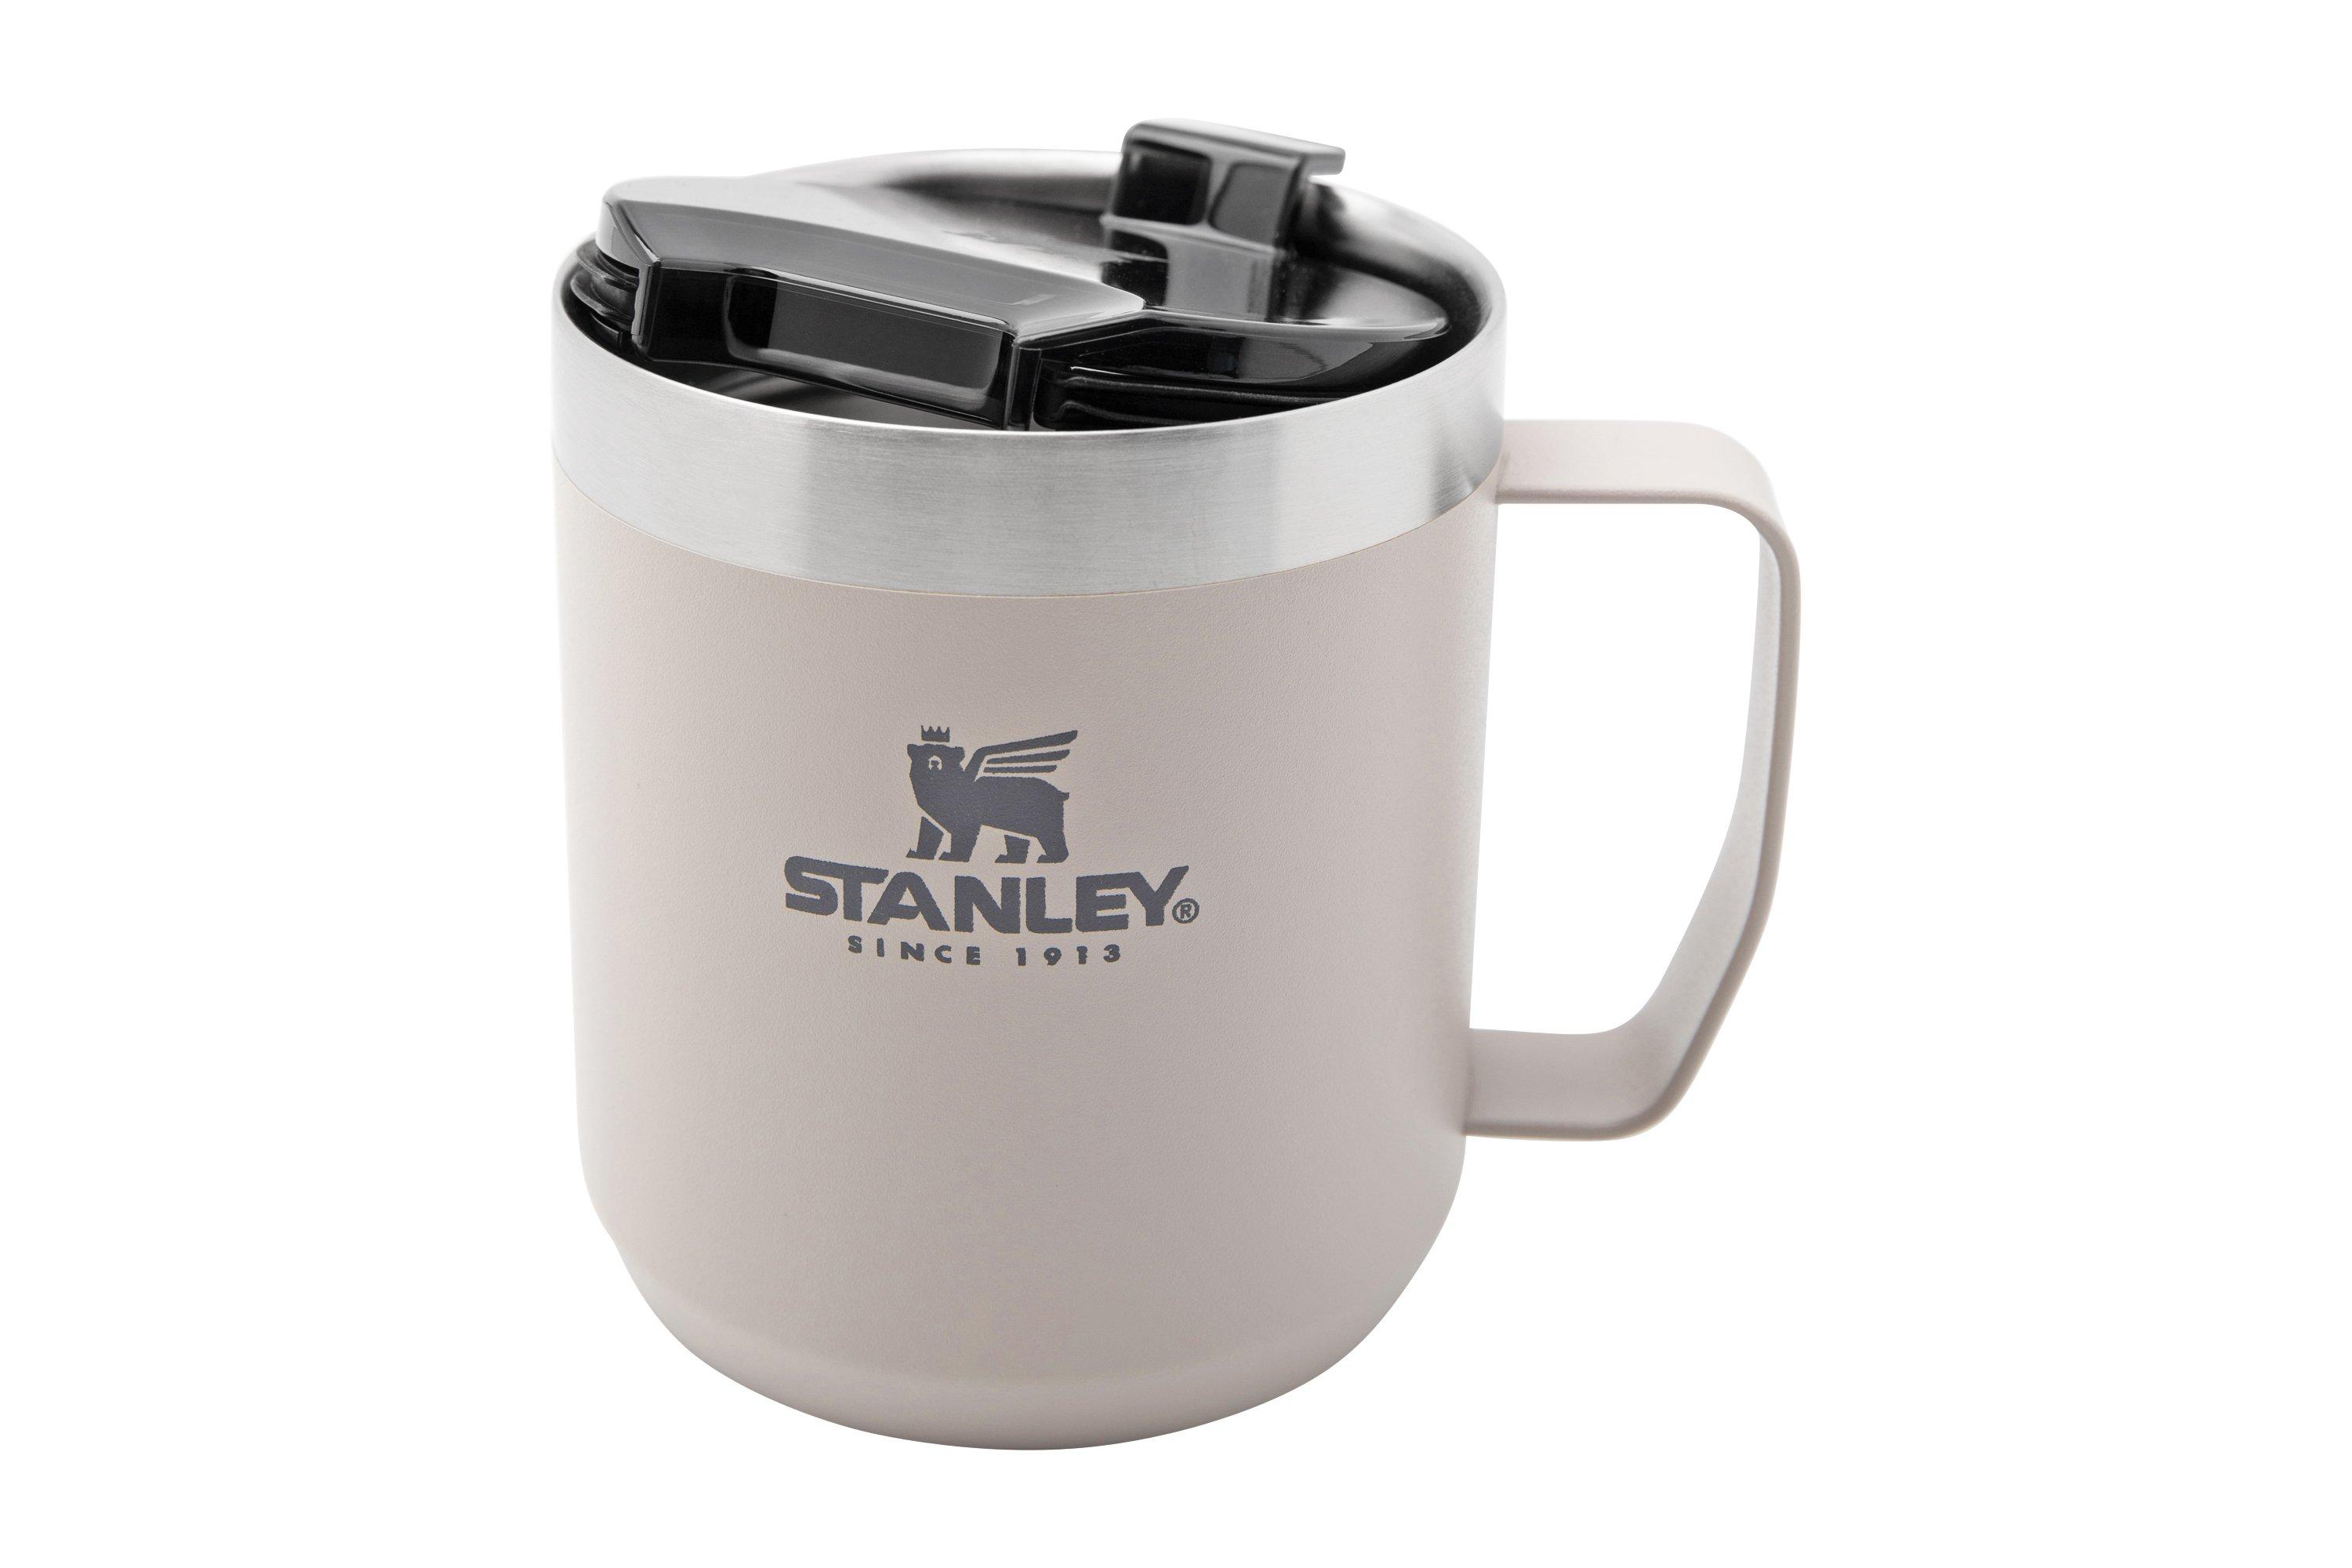 Stanley The Legendary Camp Mug 350 mL - Ash  Advantageously shopping at